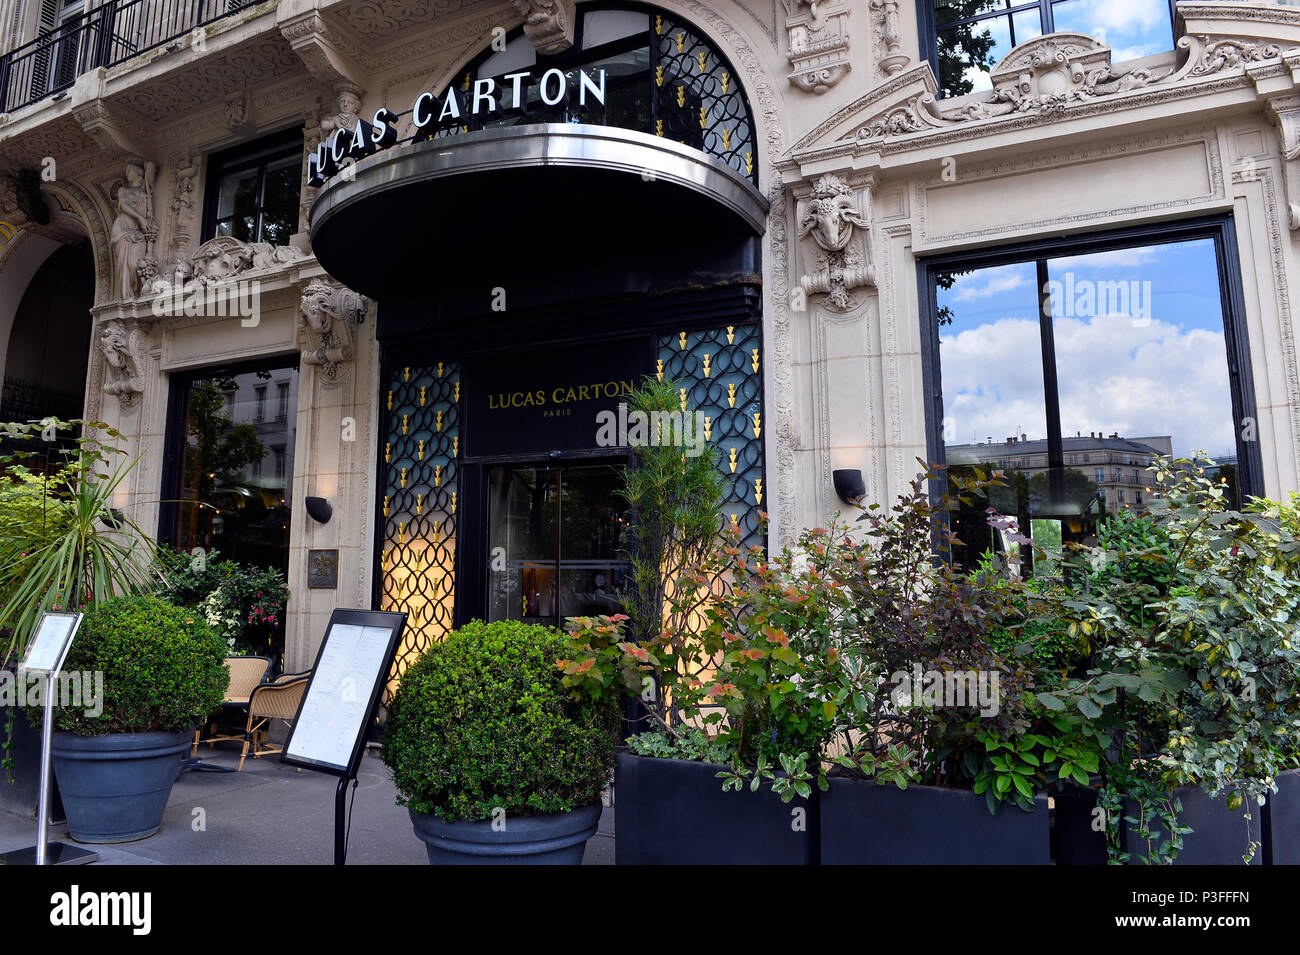 Lucas Carton Restaurant - Paris - France Stock Photo - Alamy